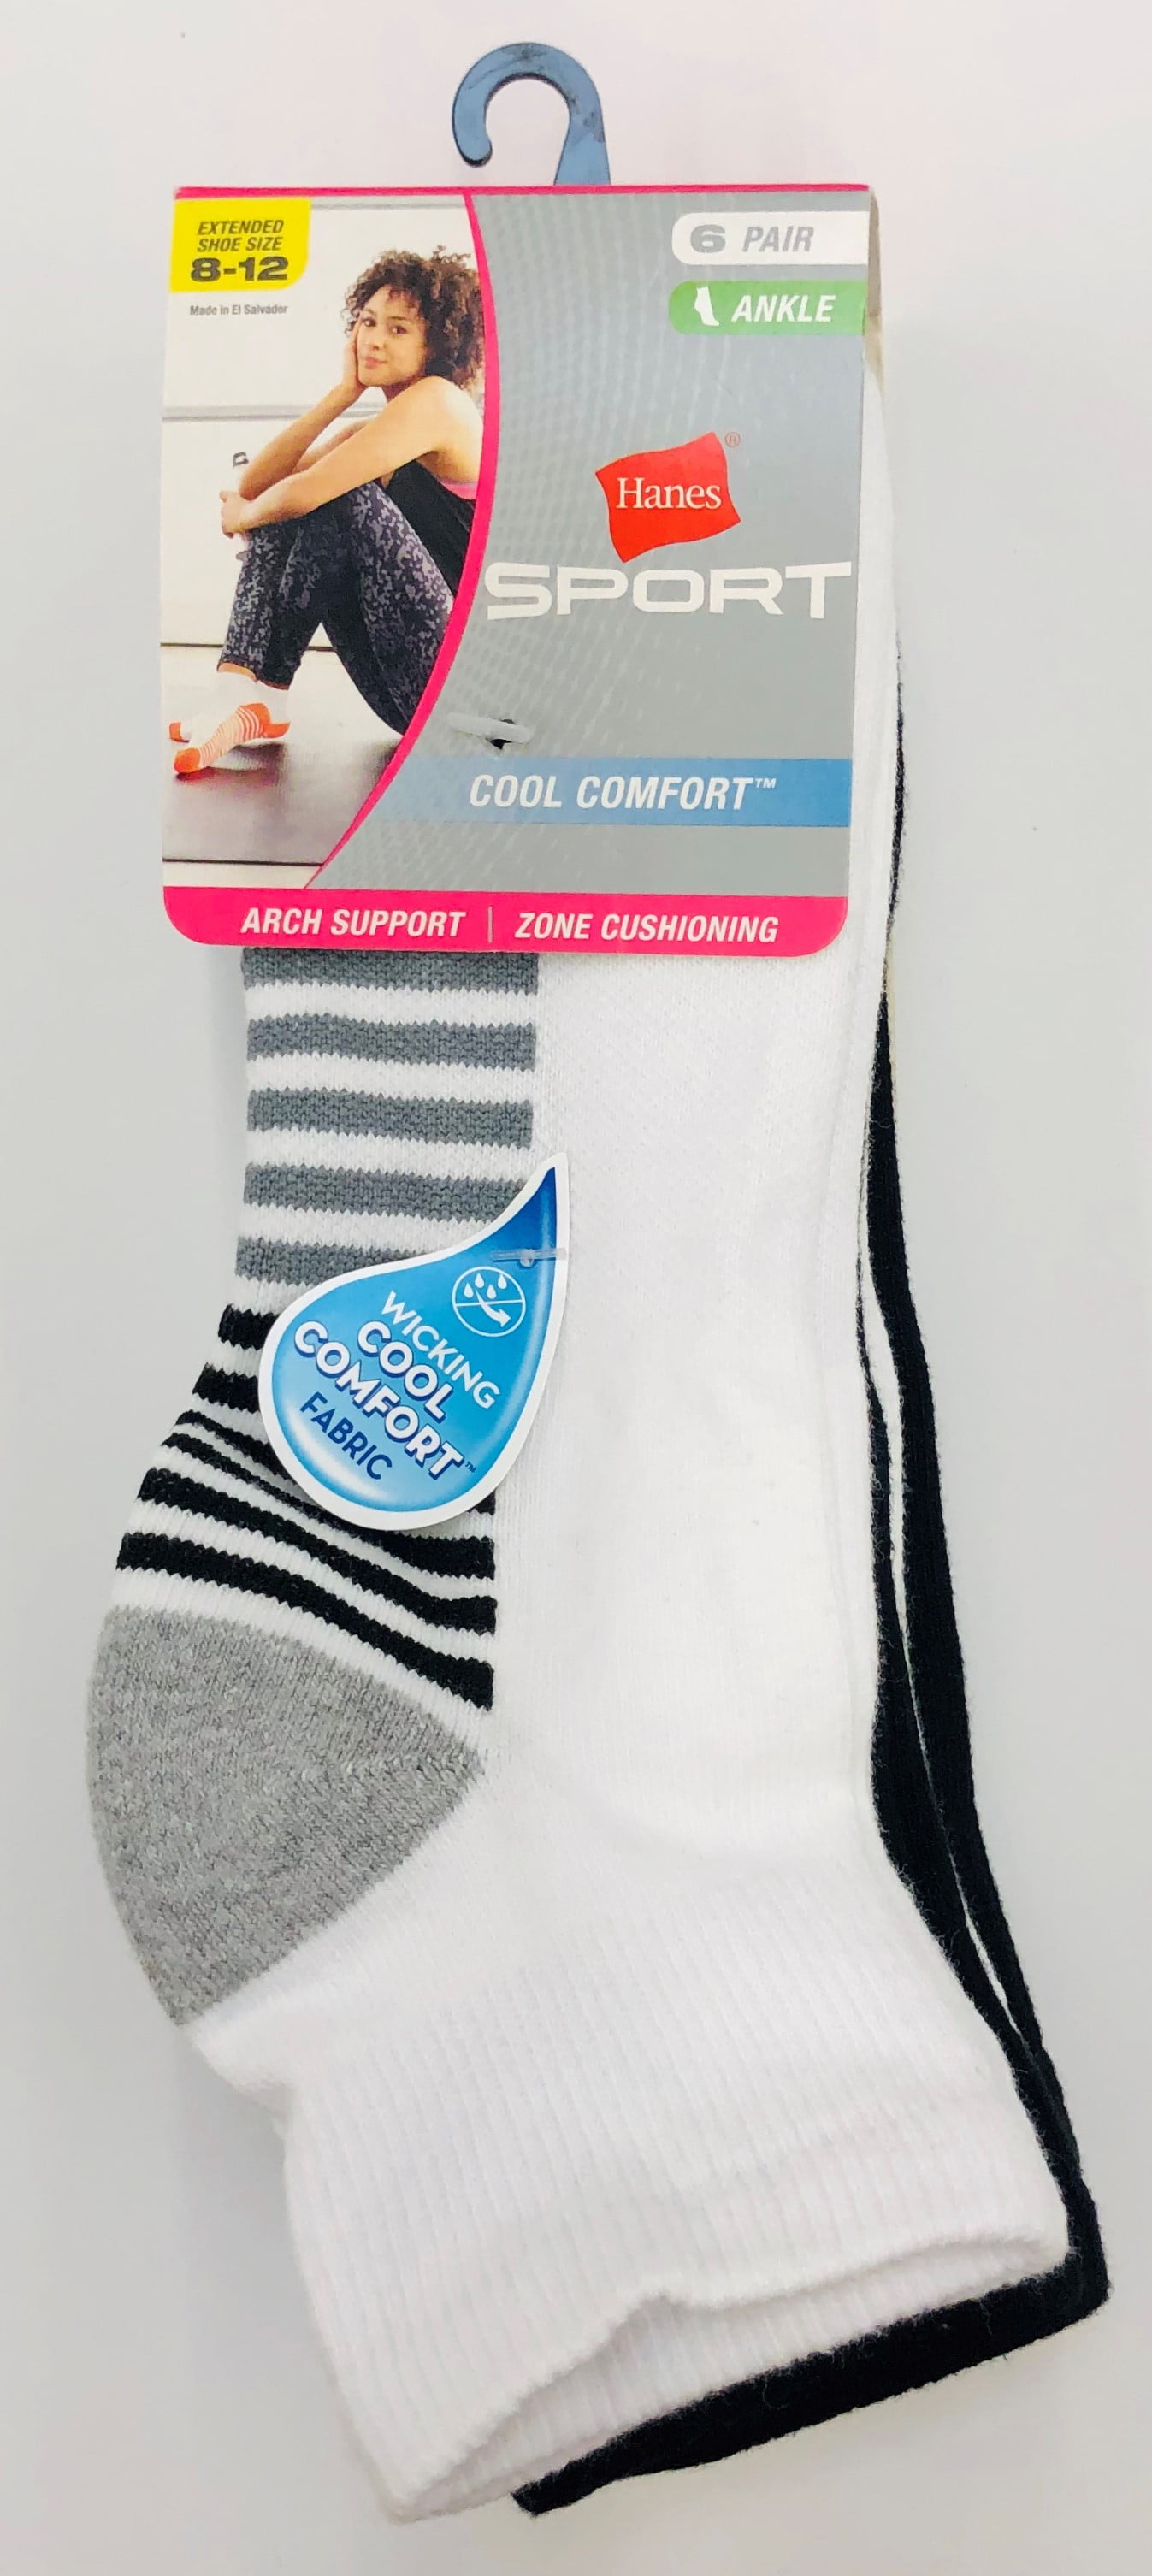 Hanes - Hanes Sport Cool Comfort Ankle Socks, 6 Pair - Walmart.com